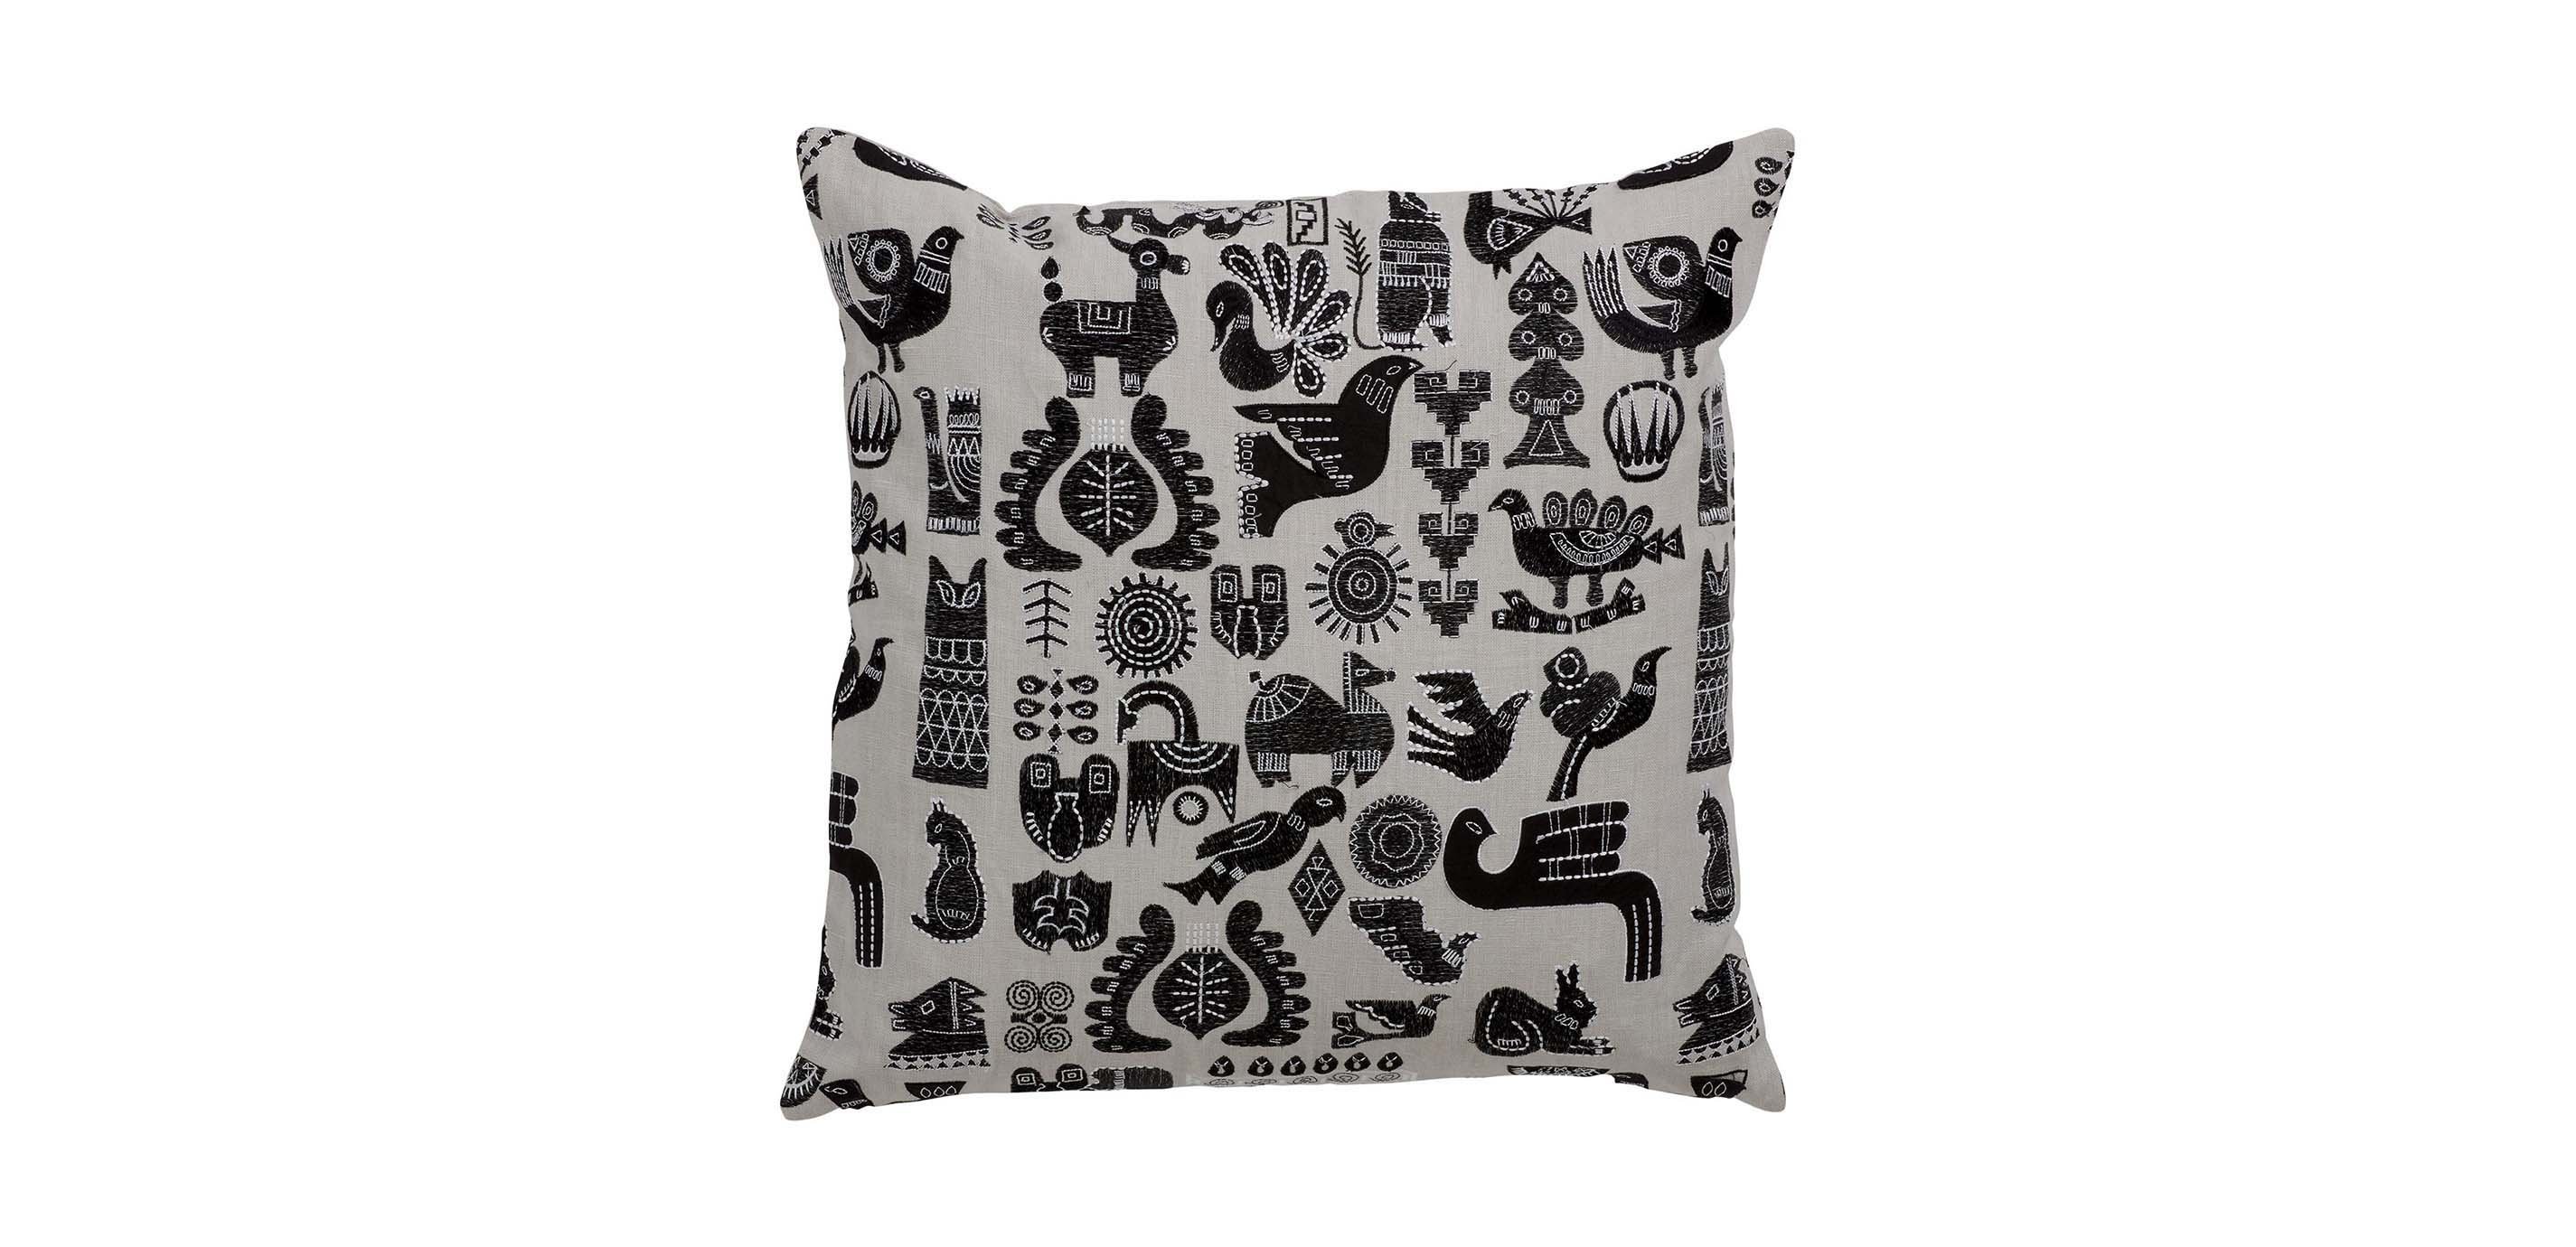 Embroidered Animal Pillow, Animal Motif Pillow